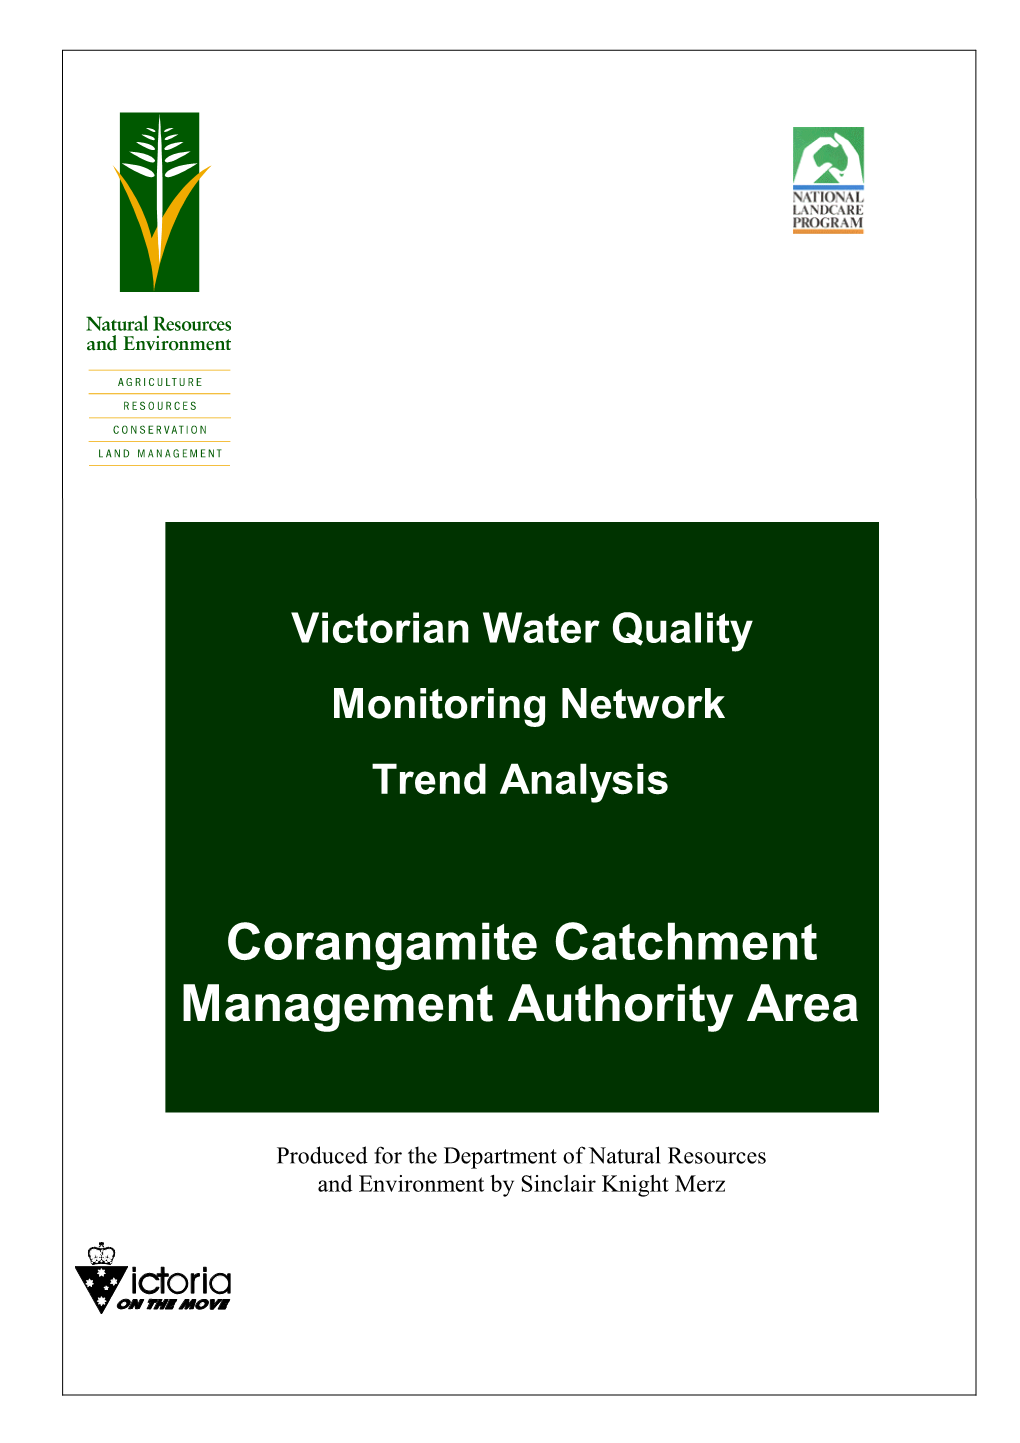 Corangamite Catchment Management Authority Area